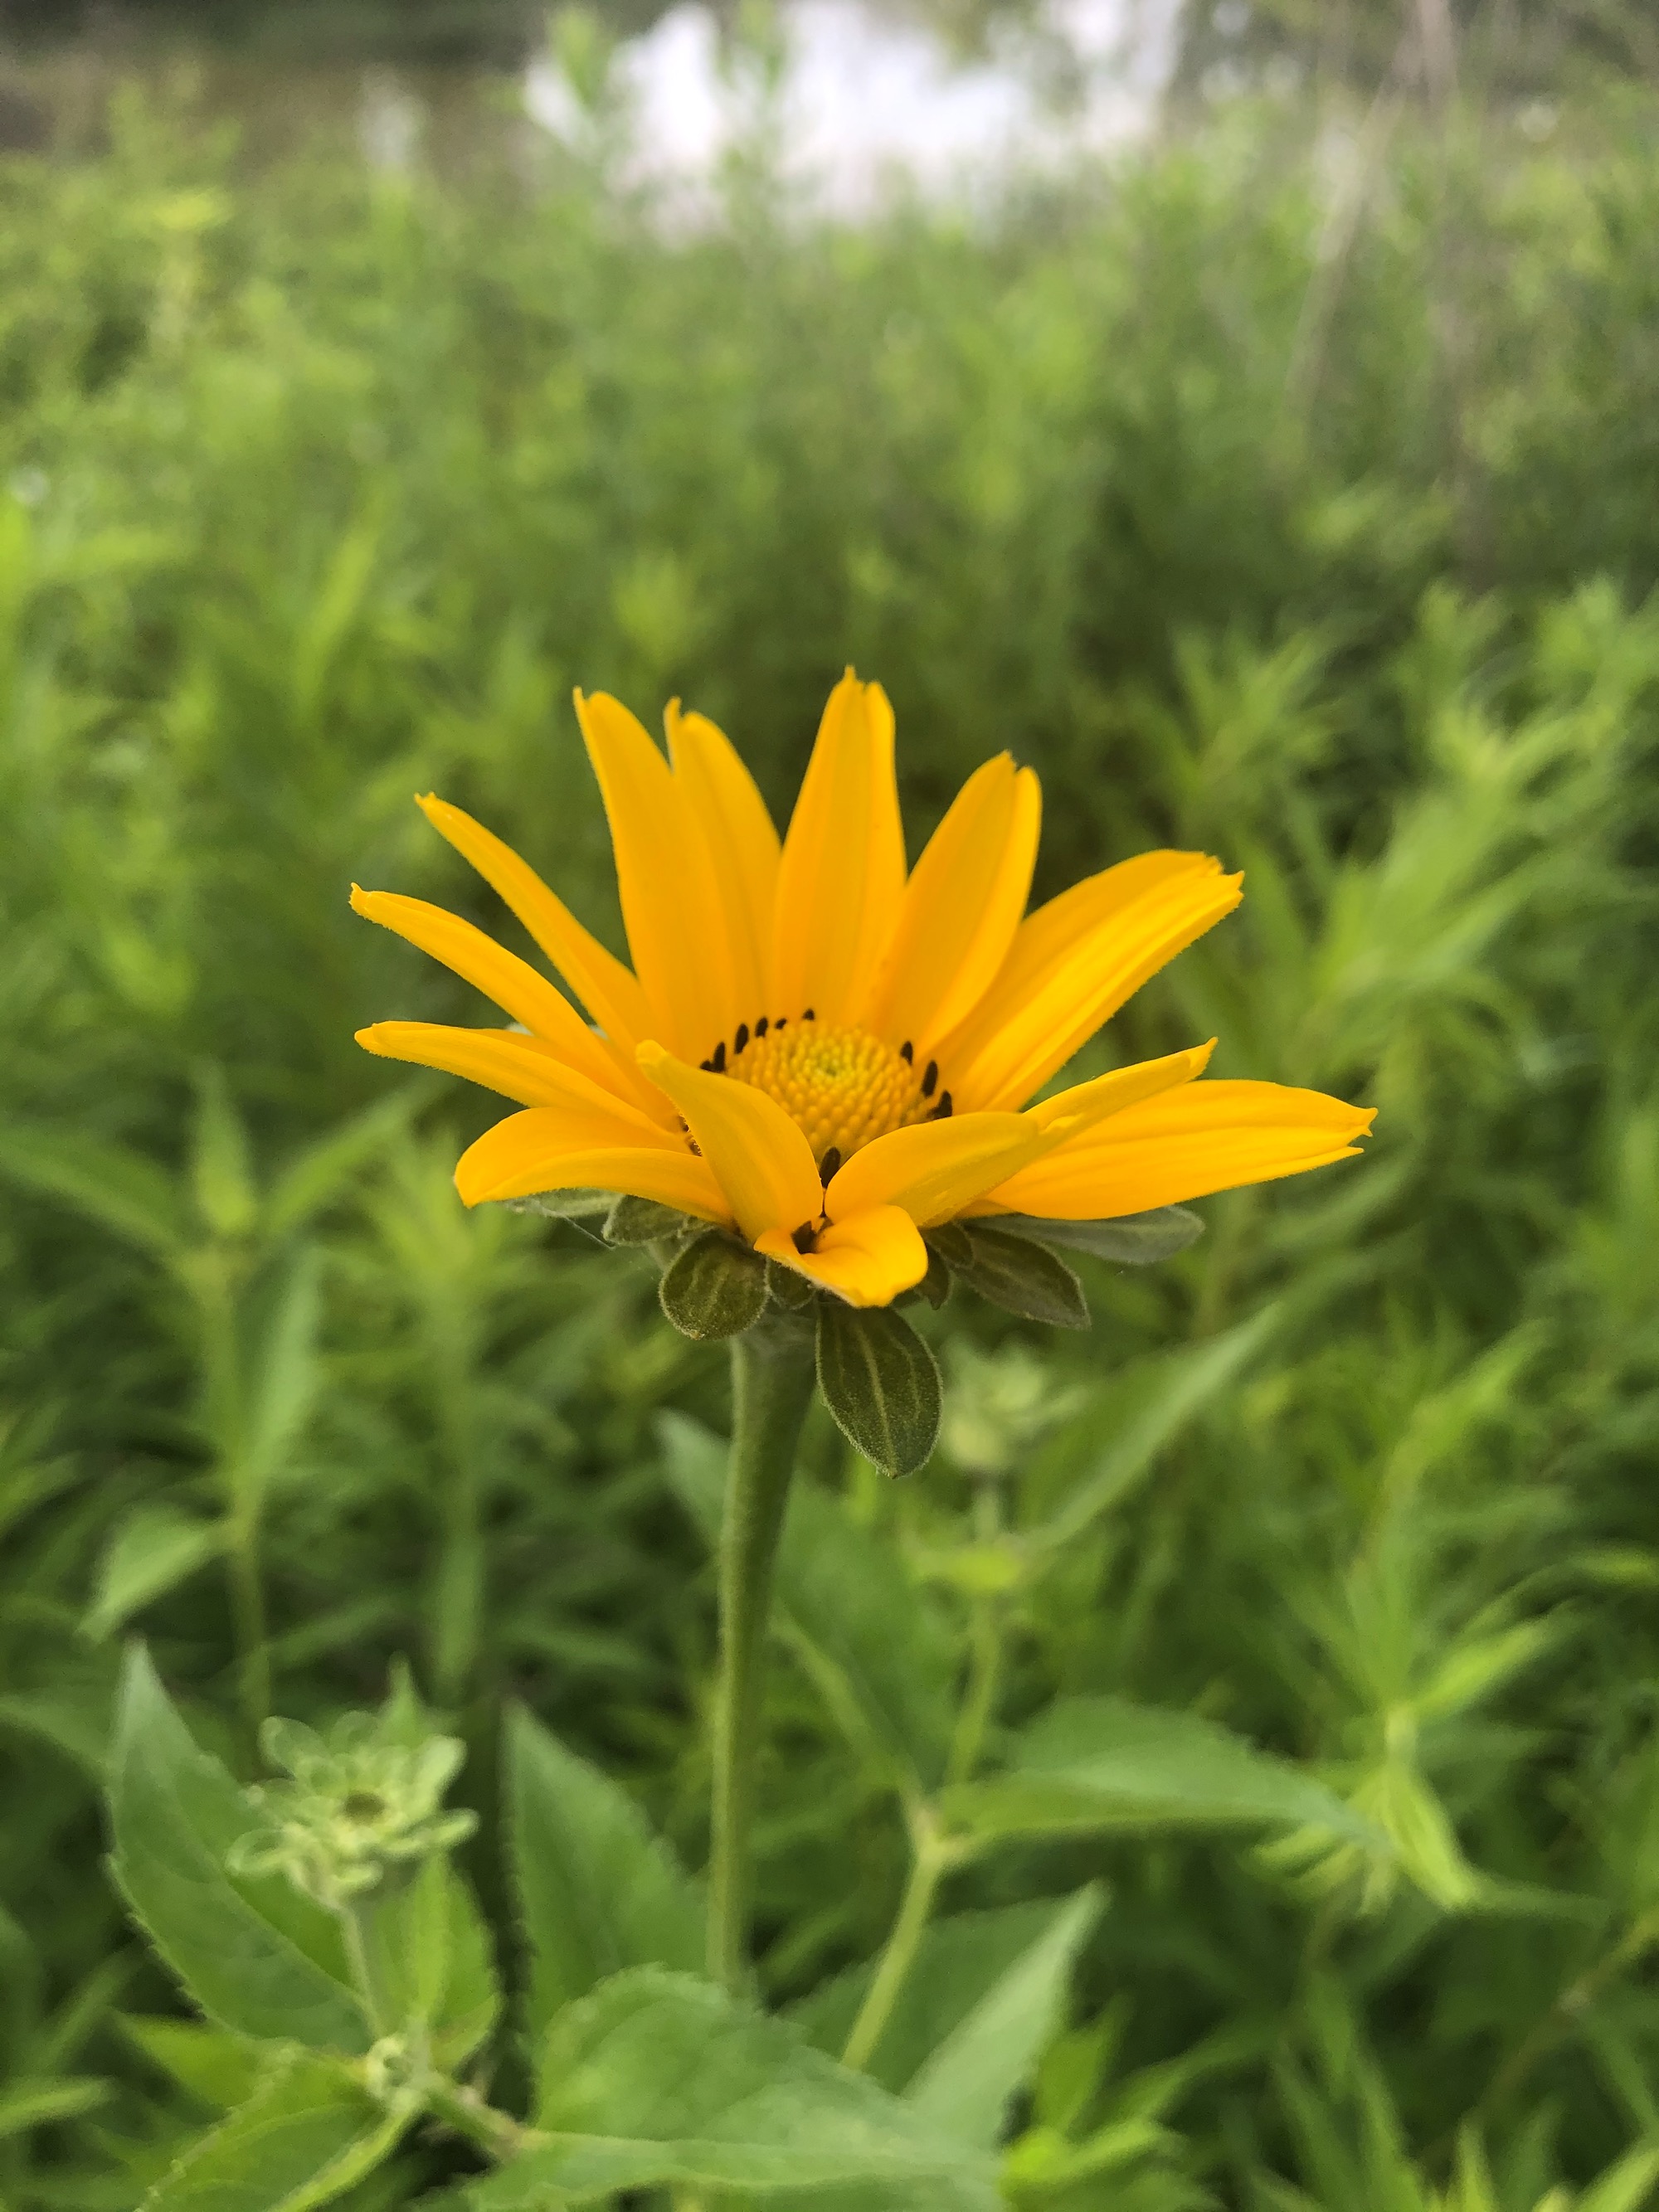 False Sunflower on shore of retaining pond in Madison, Wisconsin on June 23, 2020.